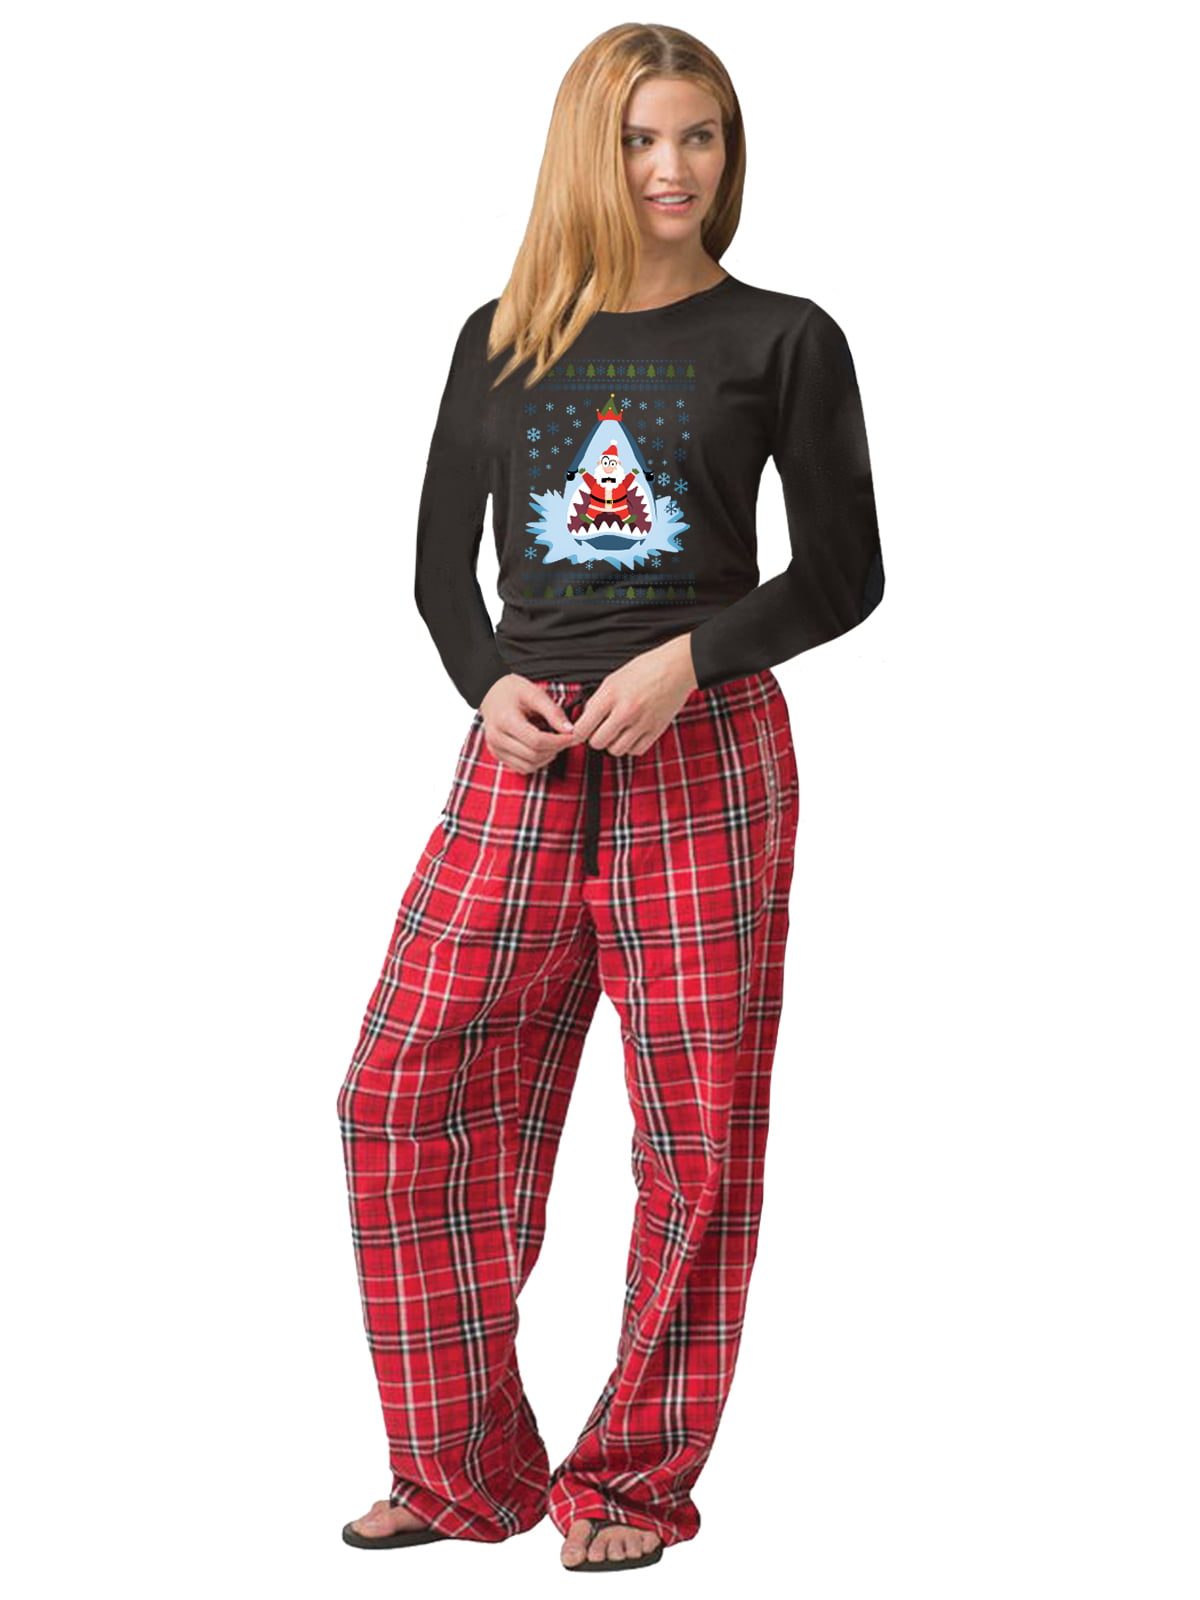 Awkward Styles - Awkward Styles Family Christmas Pajamas for Women